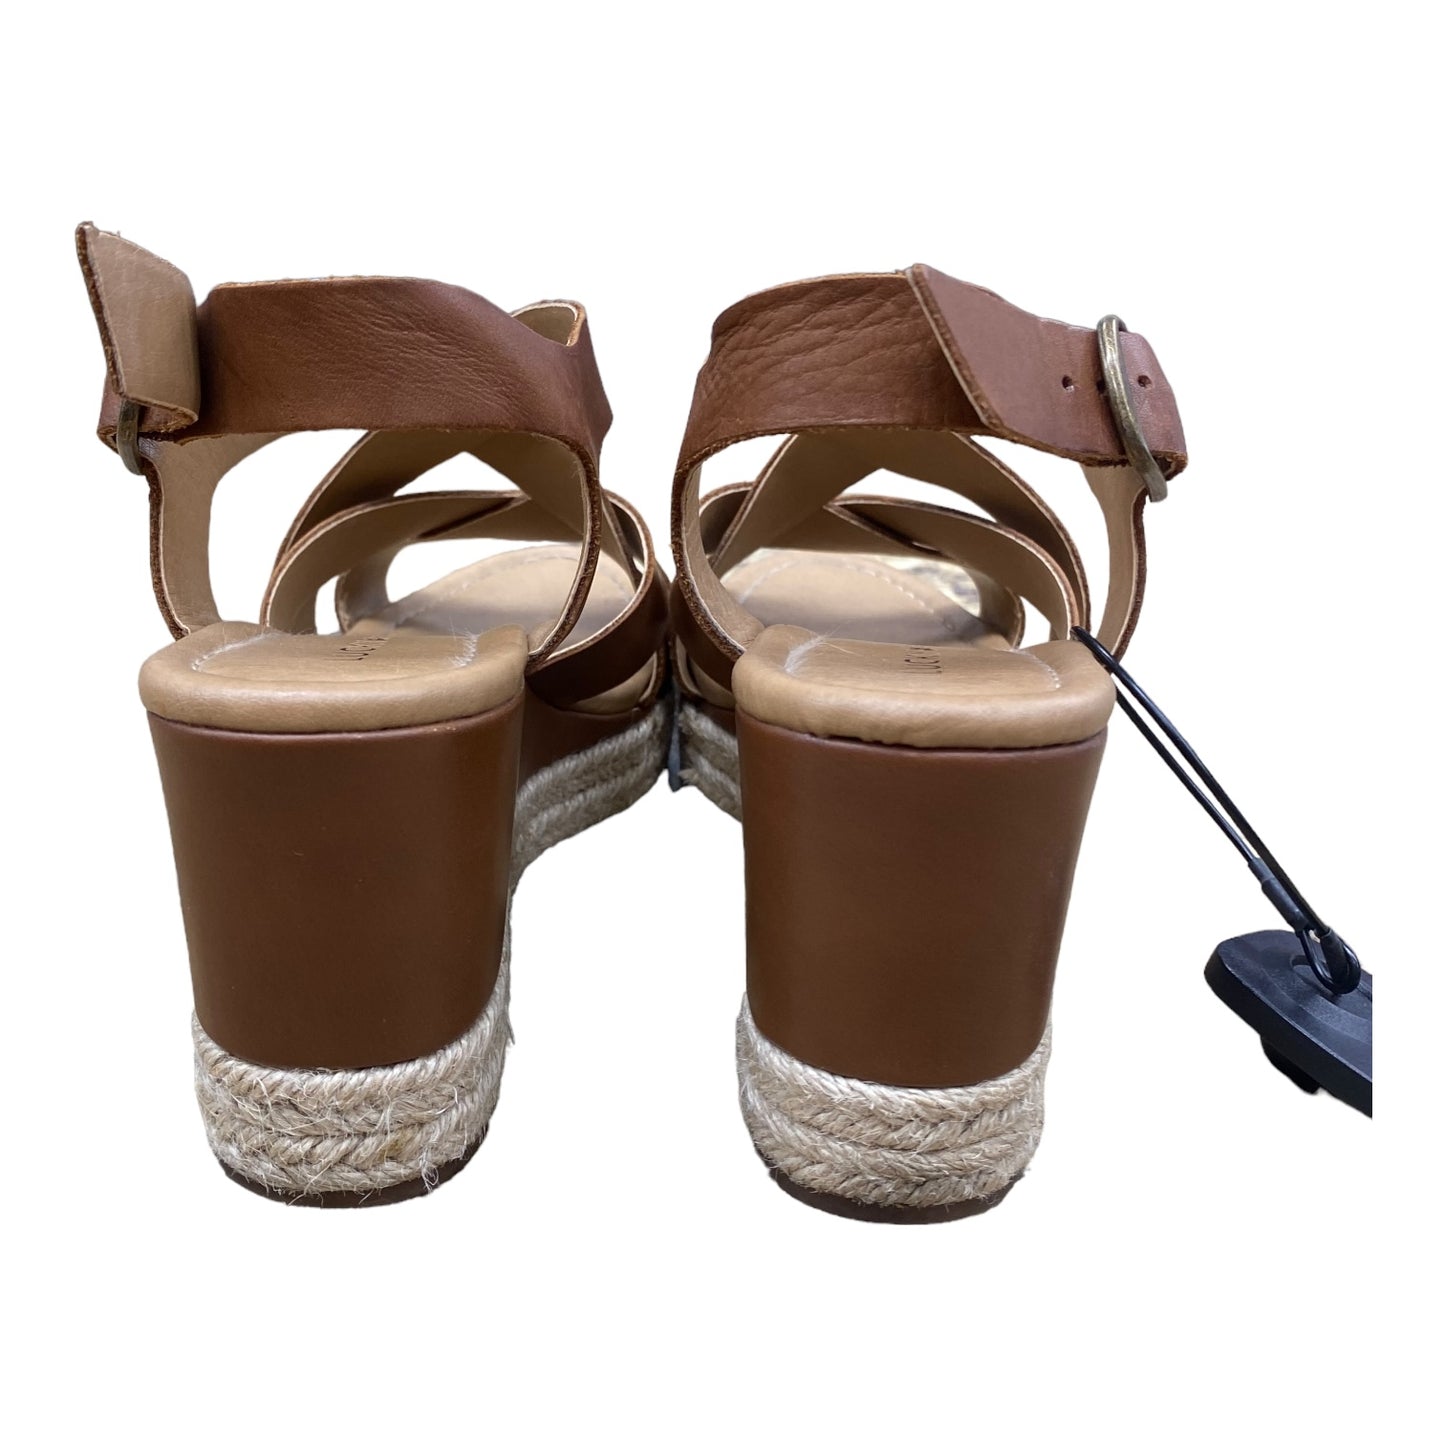 Sandals Heels Platform By Lucky Brand  Size: 5.5